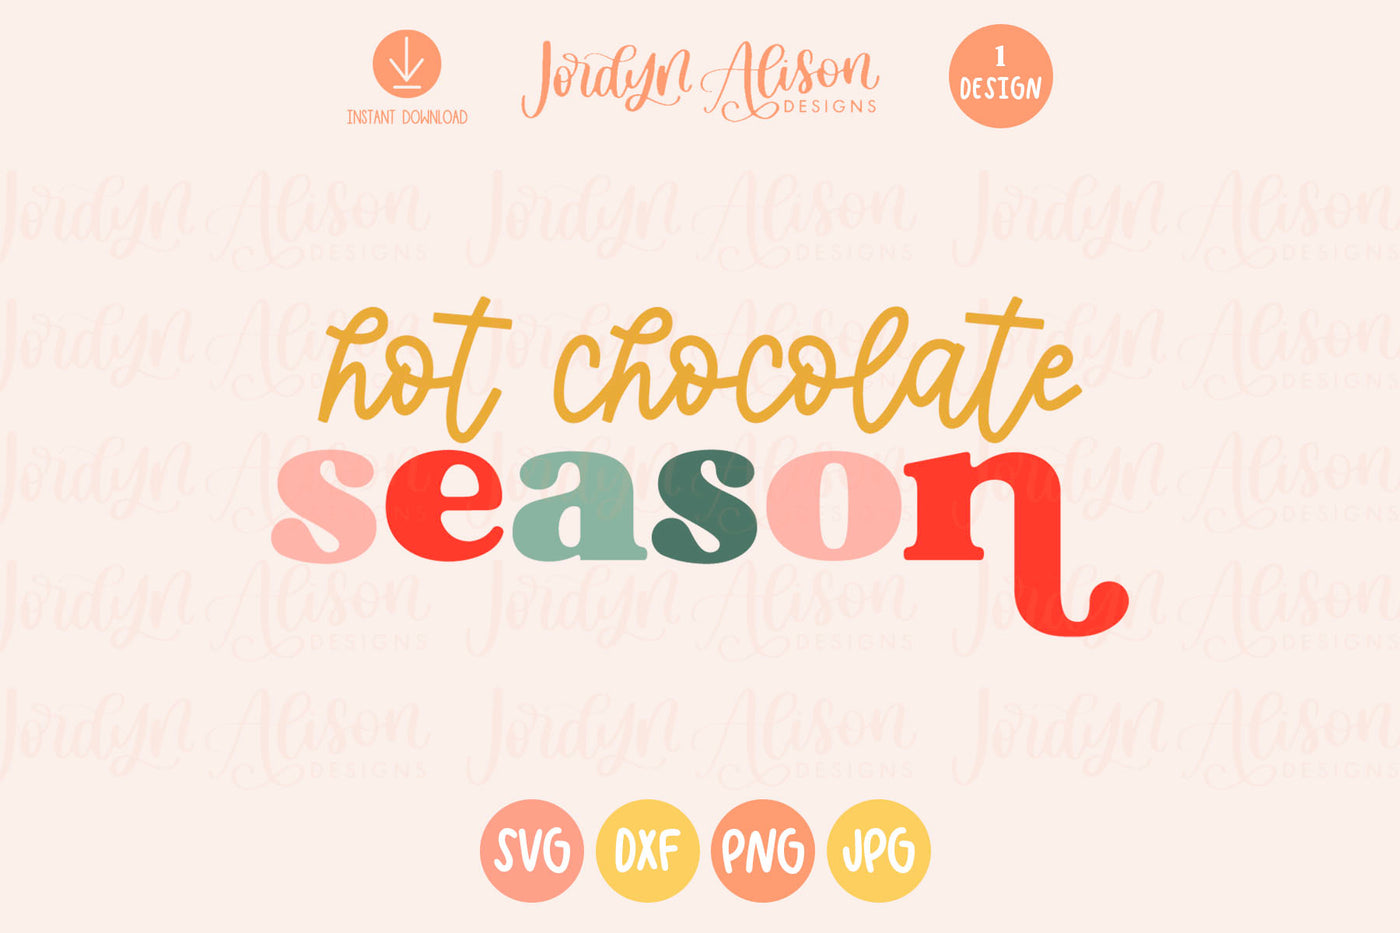 Hot Chocolate Season SVG